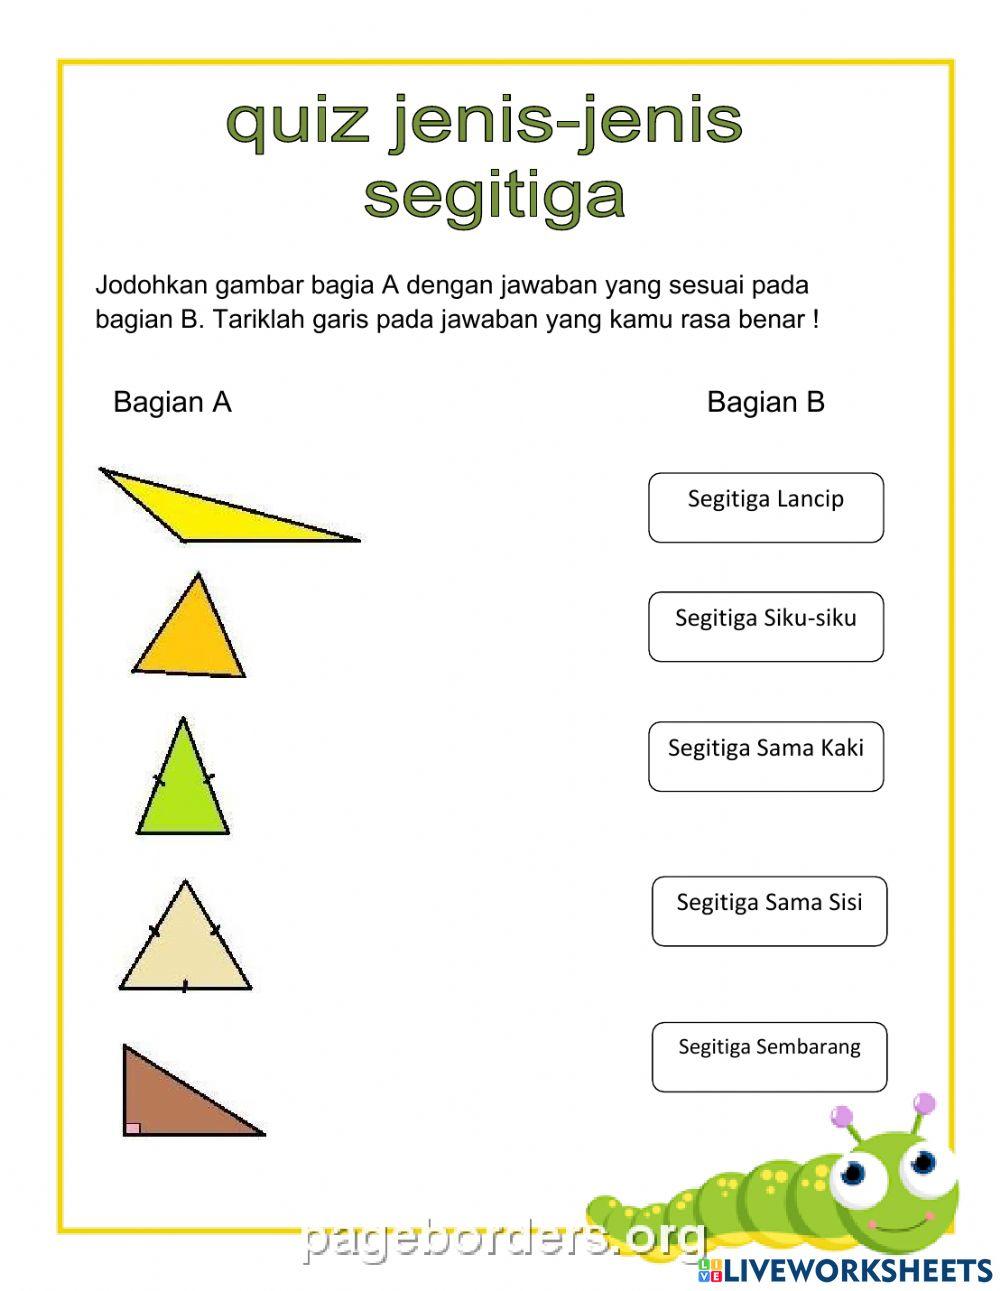 Quiz jenis-jenis segitiga